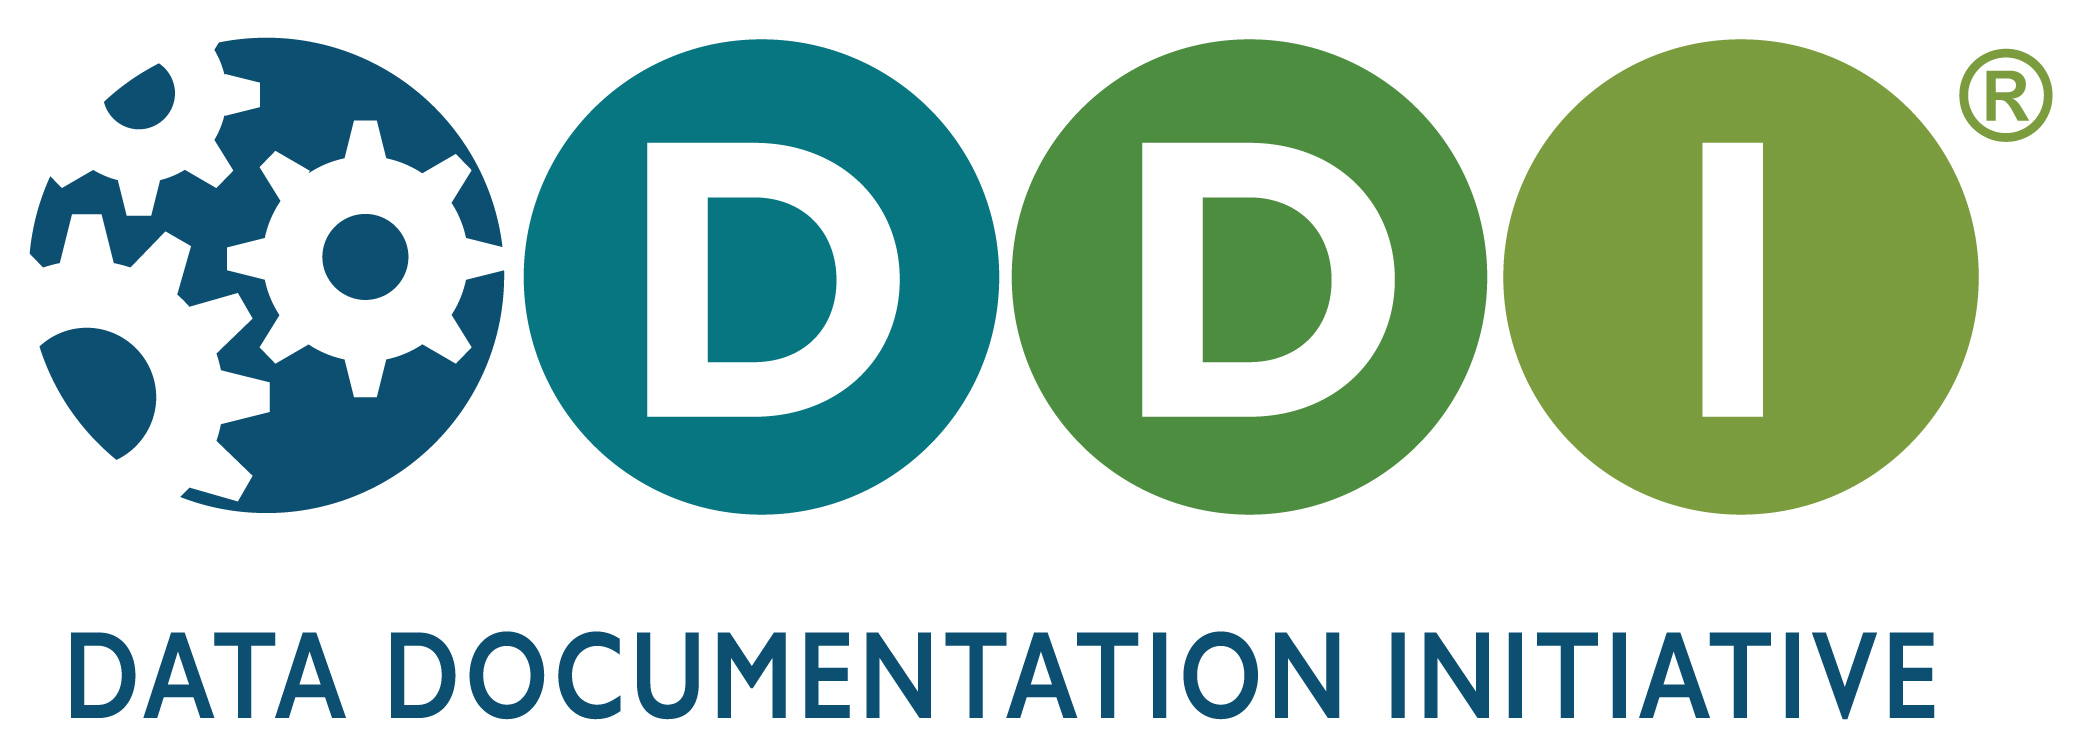 DDI Logo with Tagline 2 -- "Data Documentation Initiative"